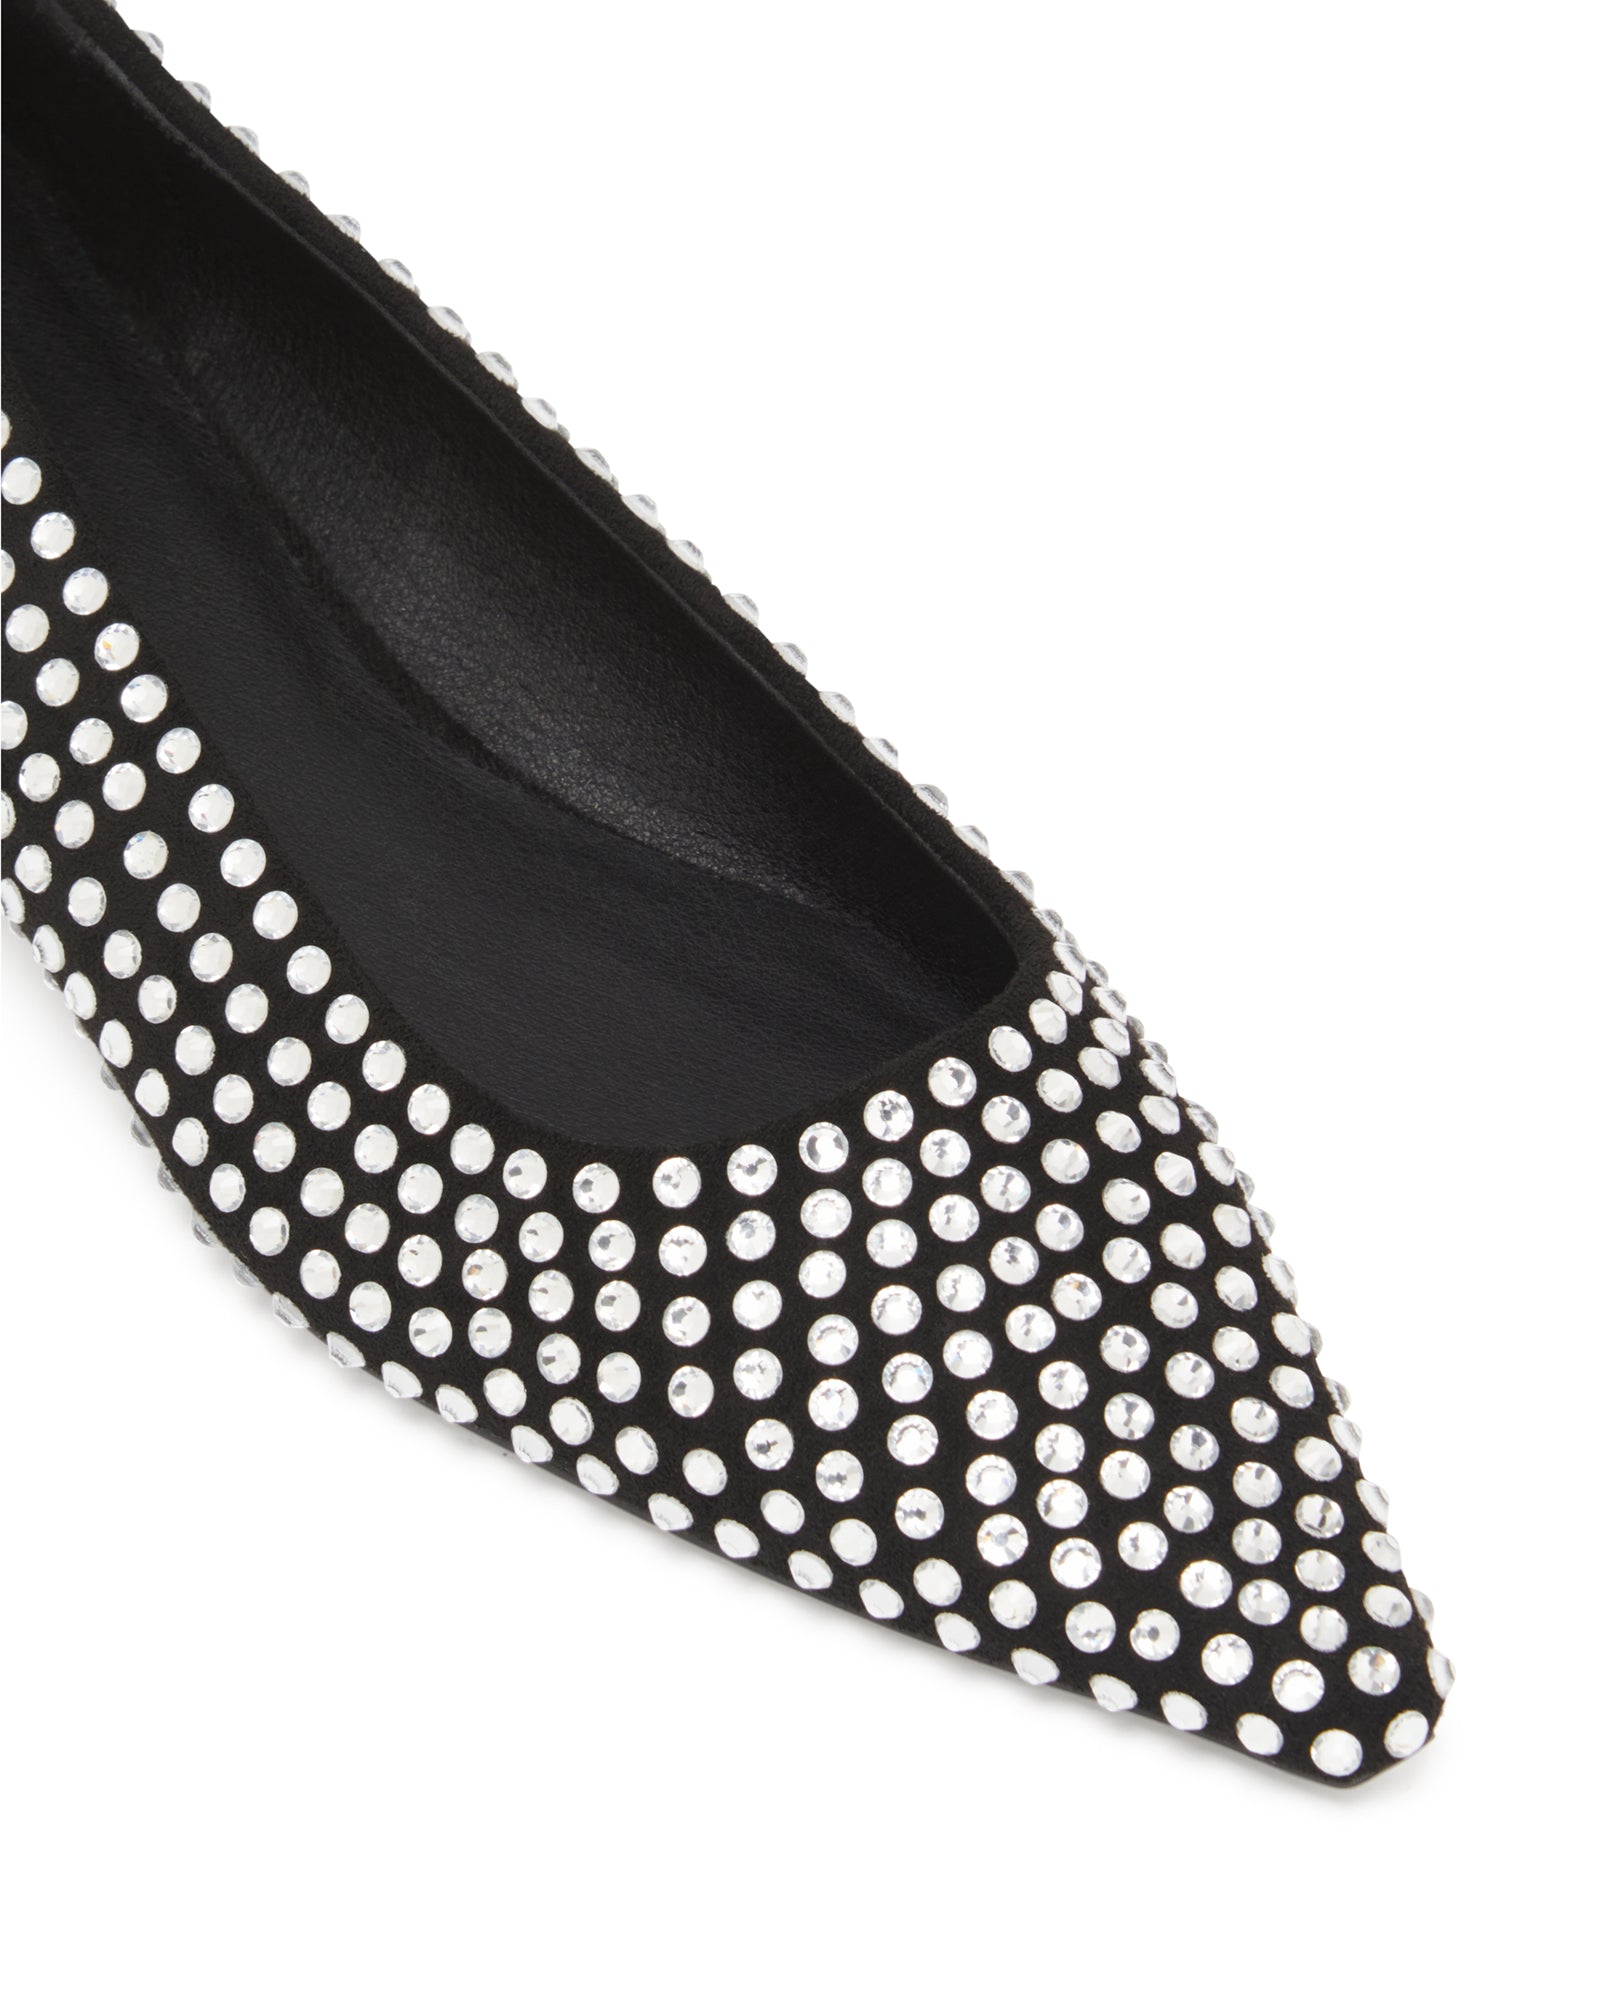 Therapy Shoes Mirage Black Suede/Rhinestone | Women's Heel | Low | Ballet | Flat